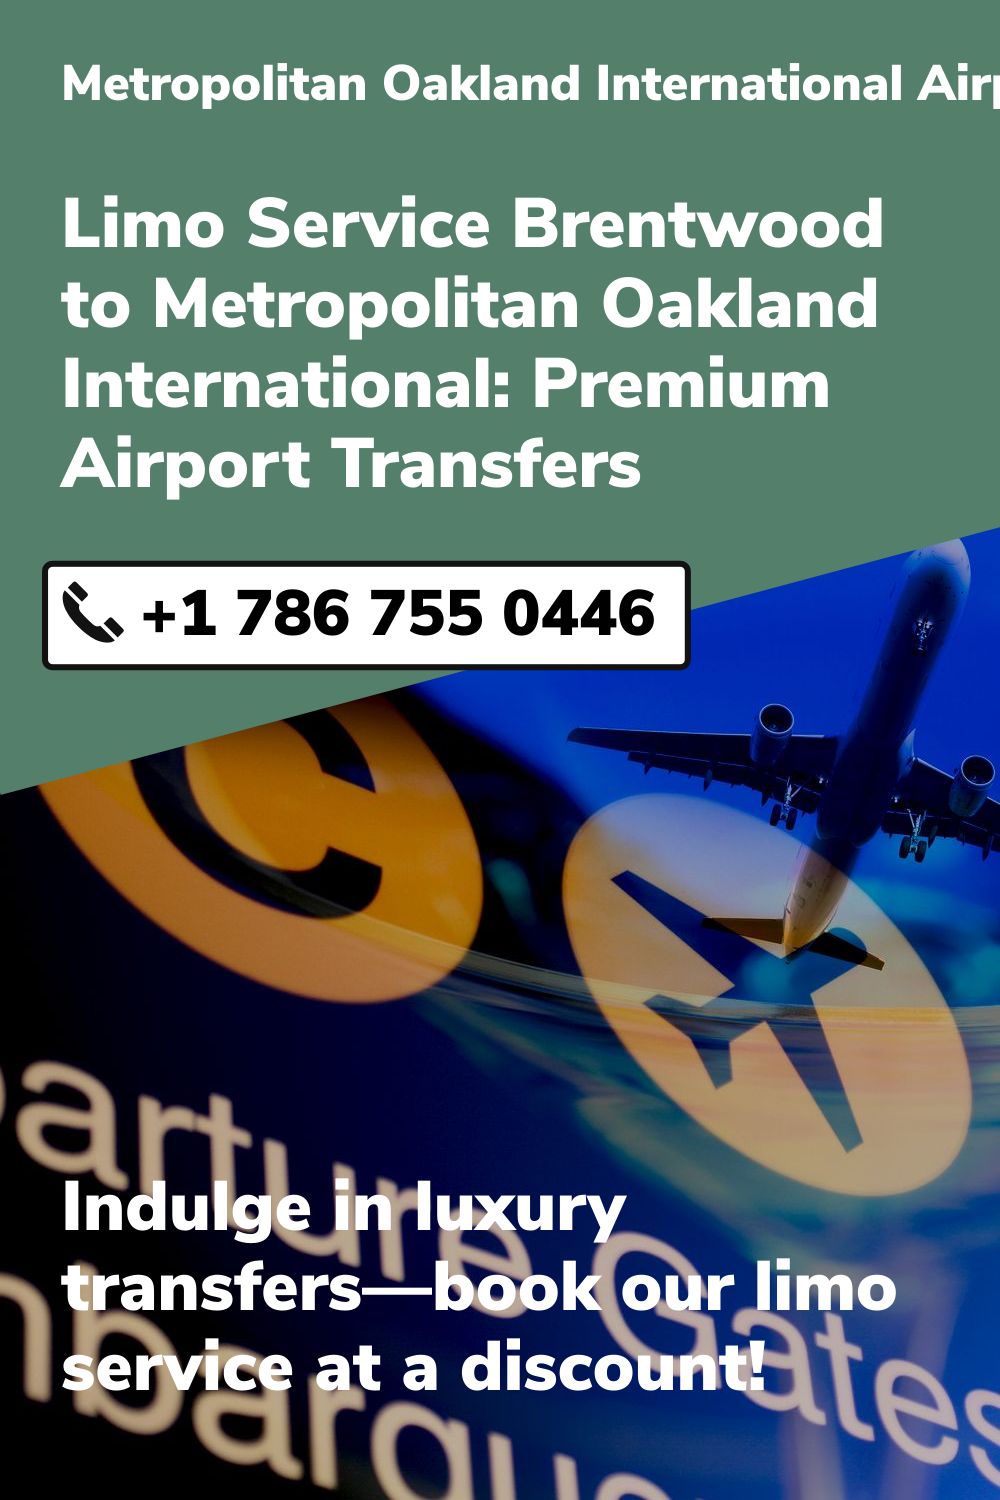 Metropolitan Oakland International Airport Limo